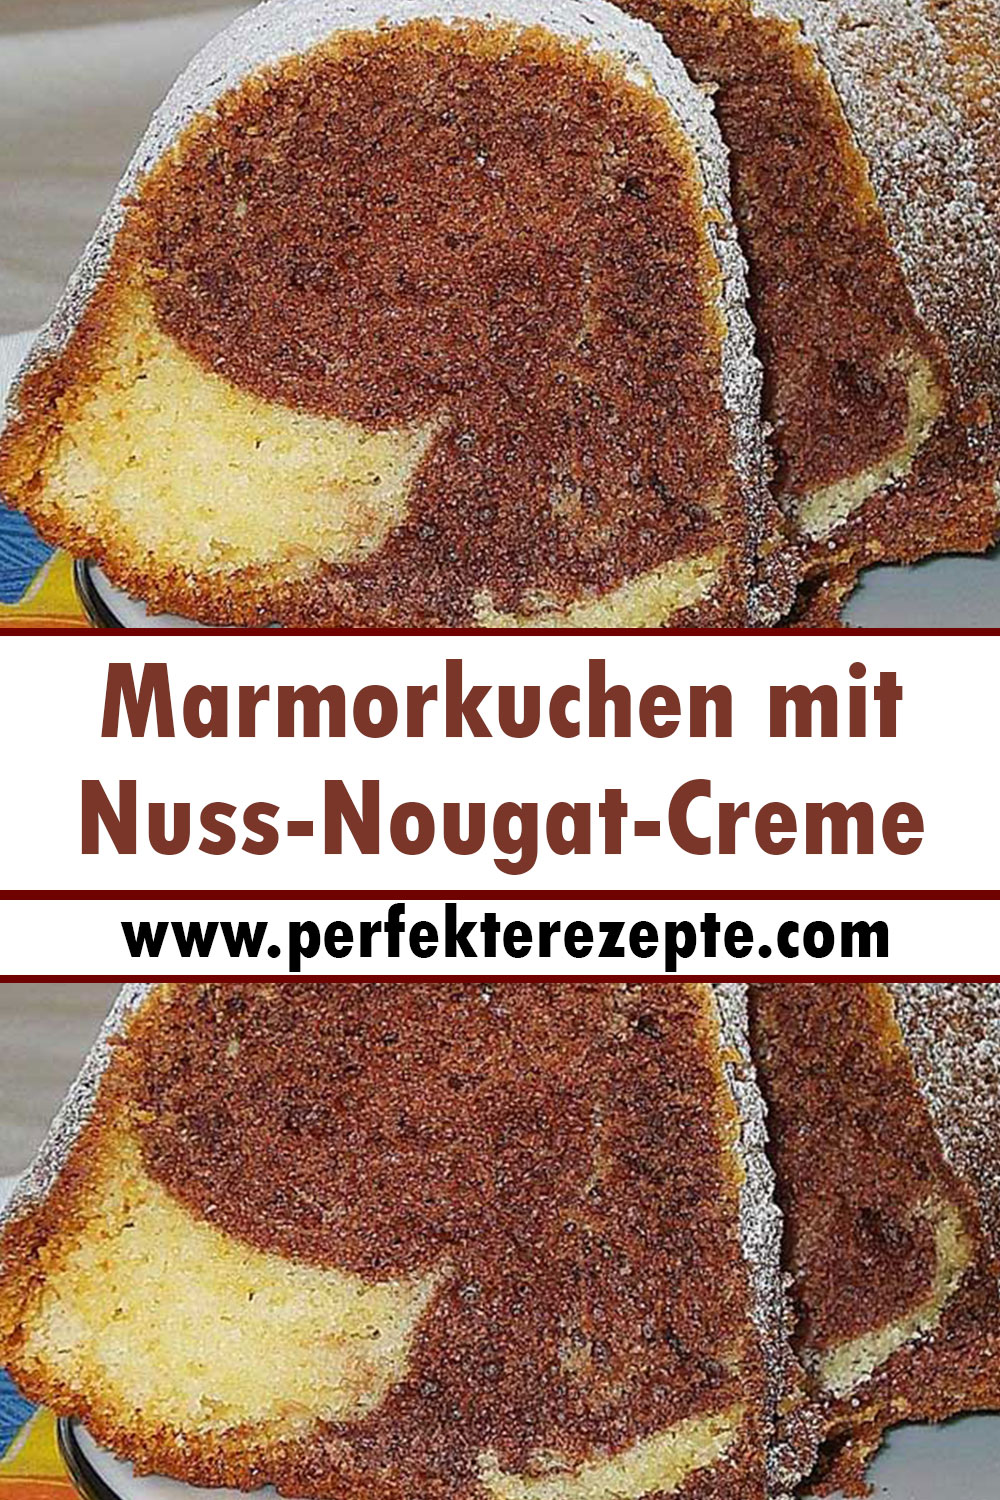 Marmorkuchen mit Nuss-Nougat-Creme Rezept